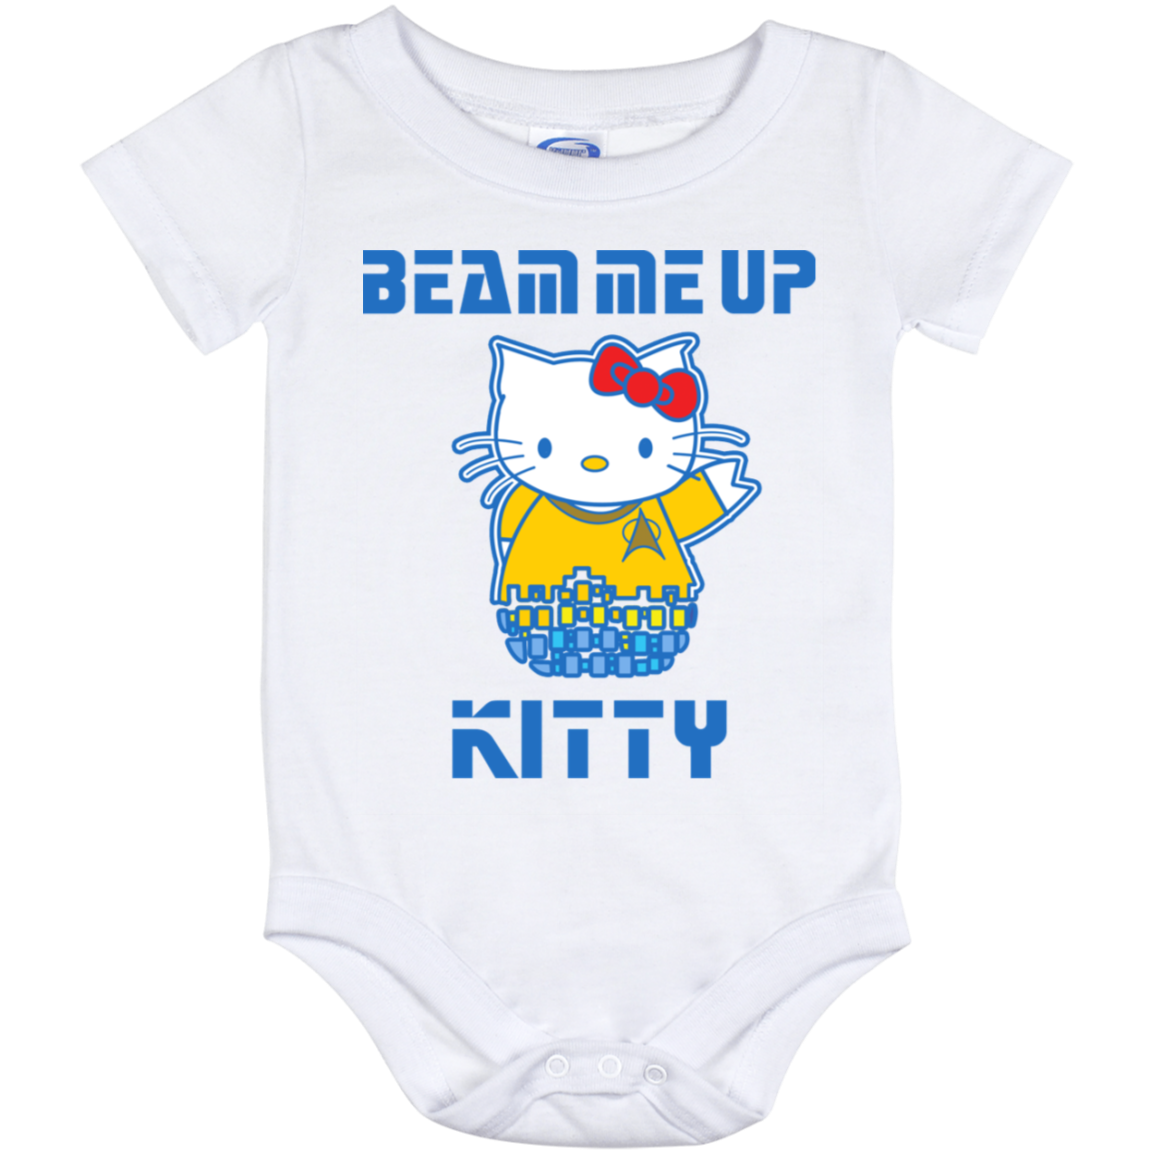 ArtichokeUSA Custom Design. Beam Me Up Kitty. Fan Art / Parody. Baby Onesie 12 Month